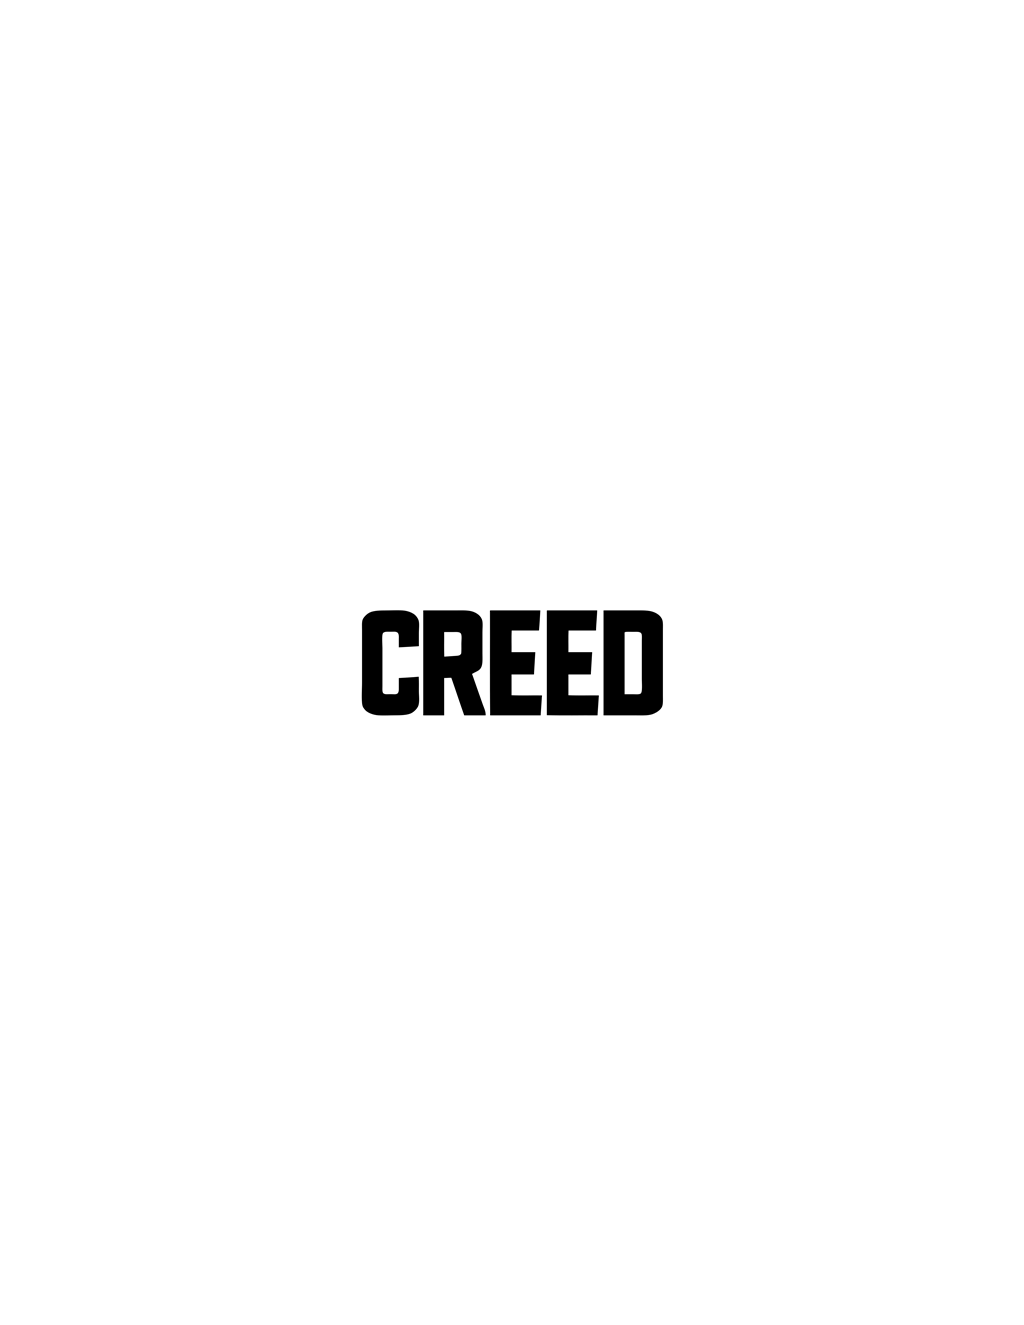 Creed logotype, transparent .png, medium, large